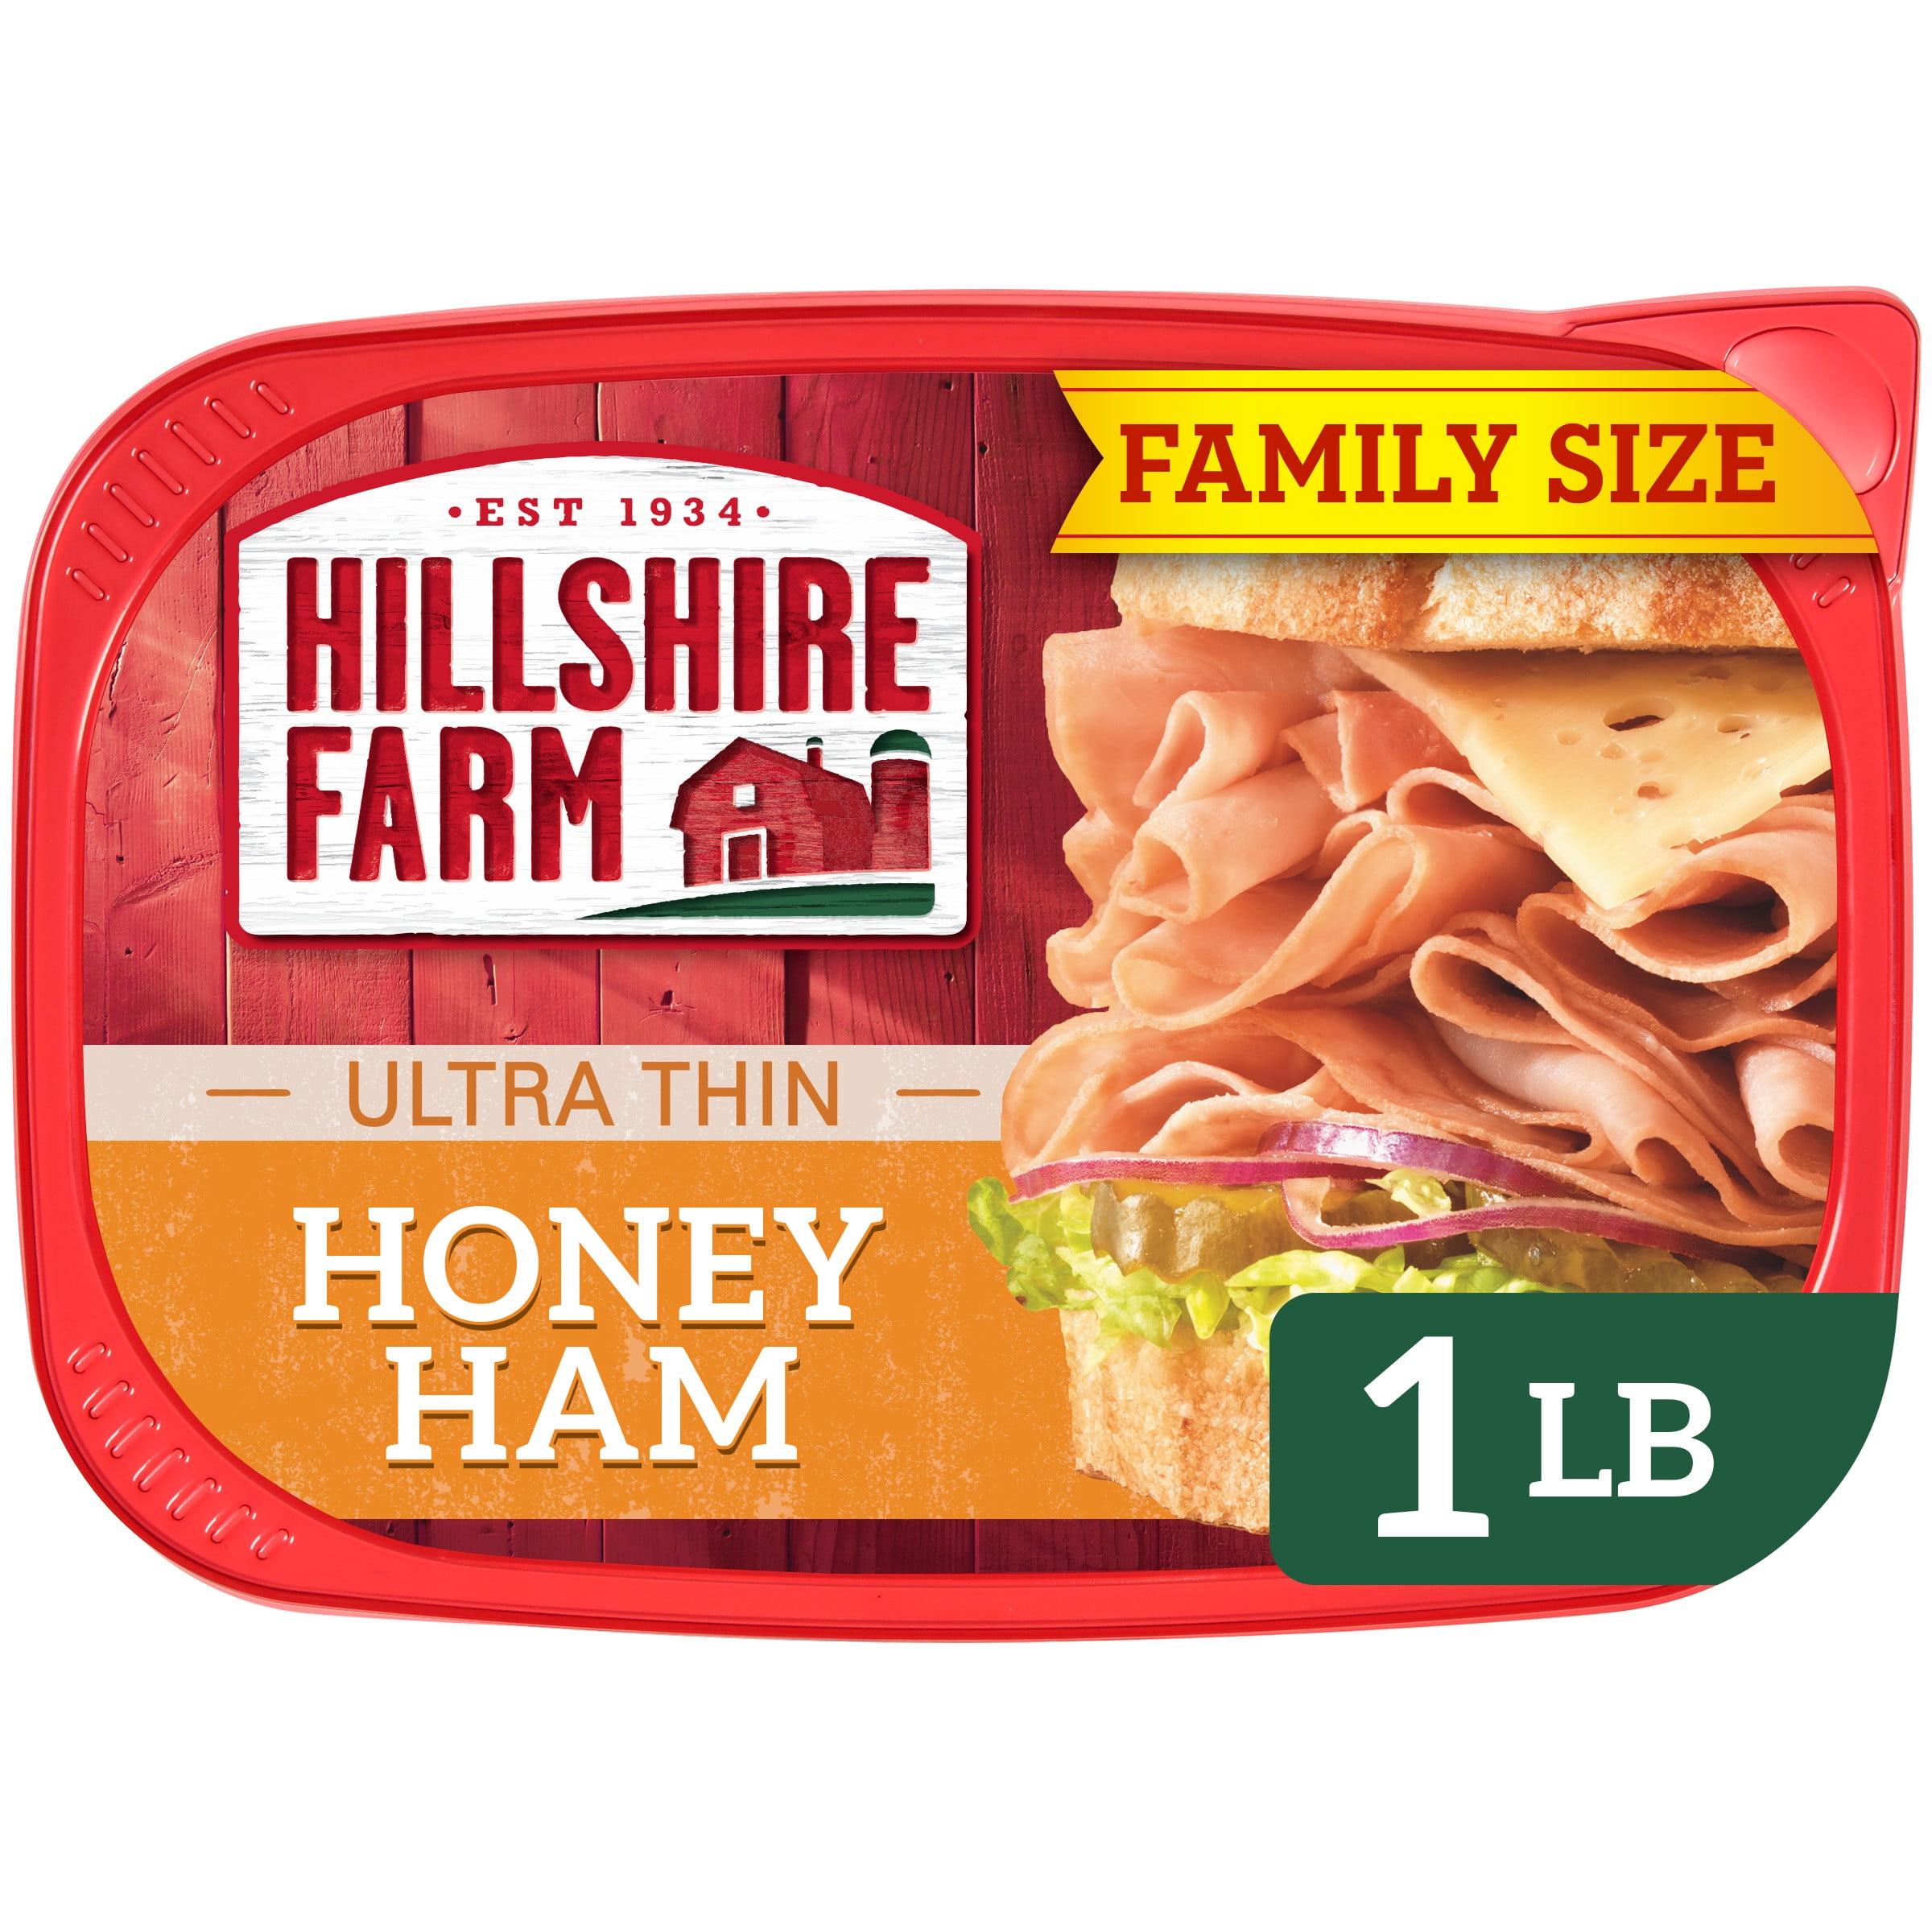 Hillshire Farm Honey Ham Lunch Meat, 1 lb